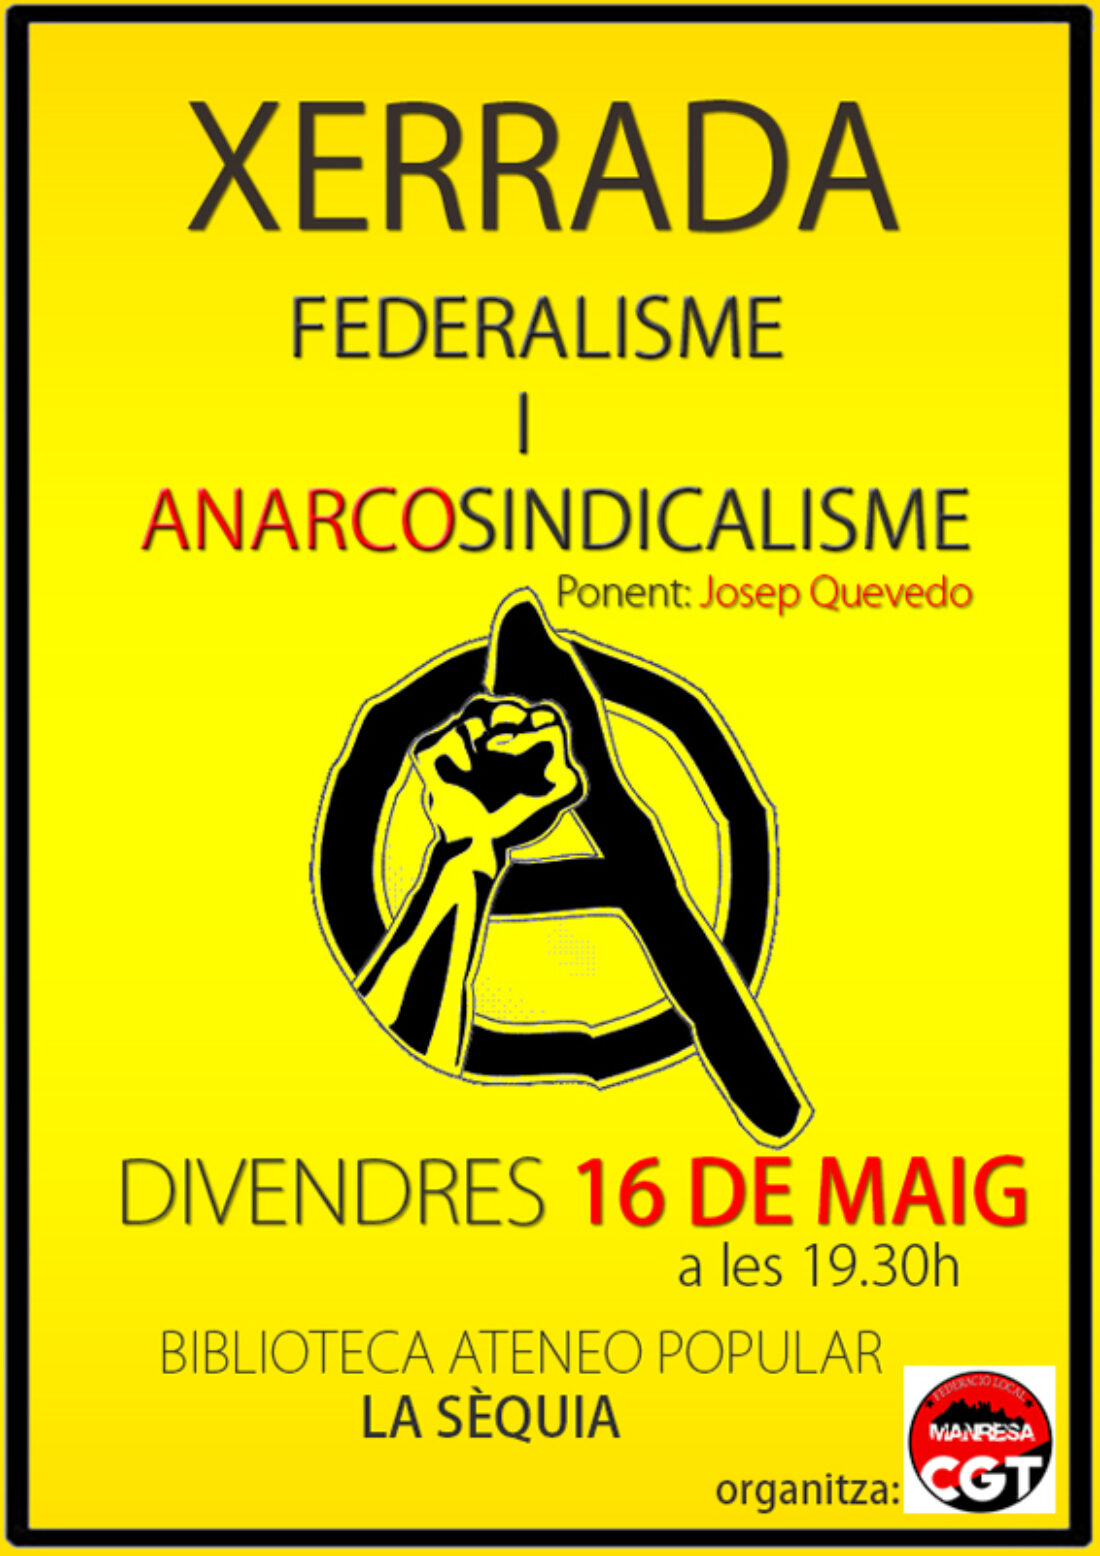 16M: Charla sobre federalismo y anarcosindicalismo en Manresa